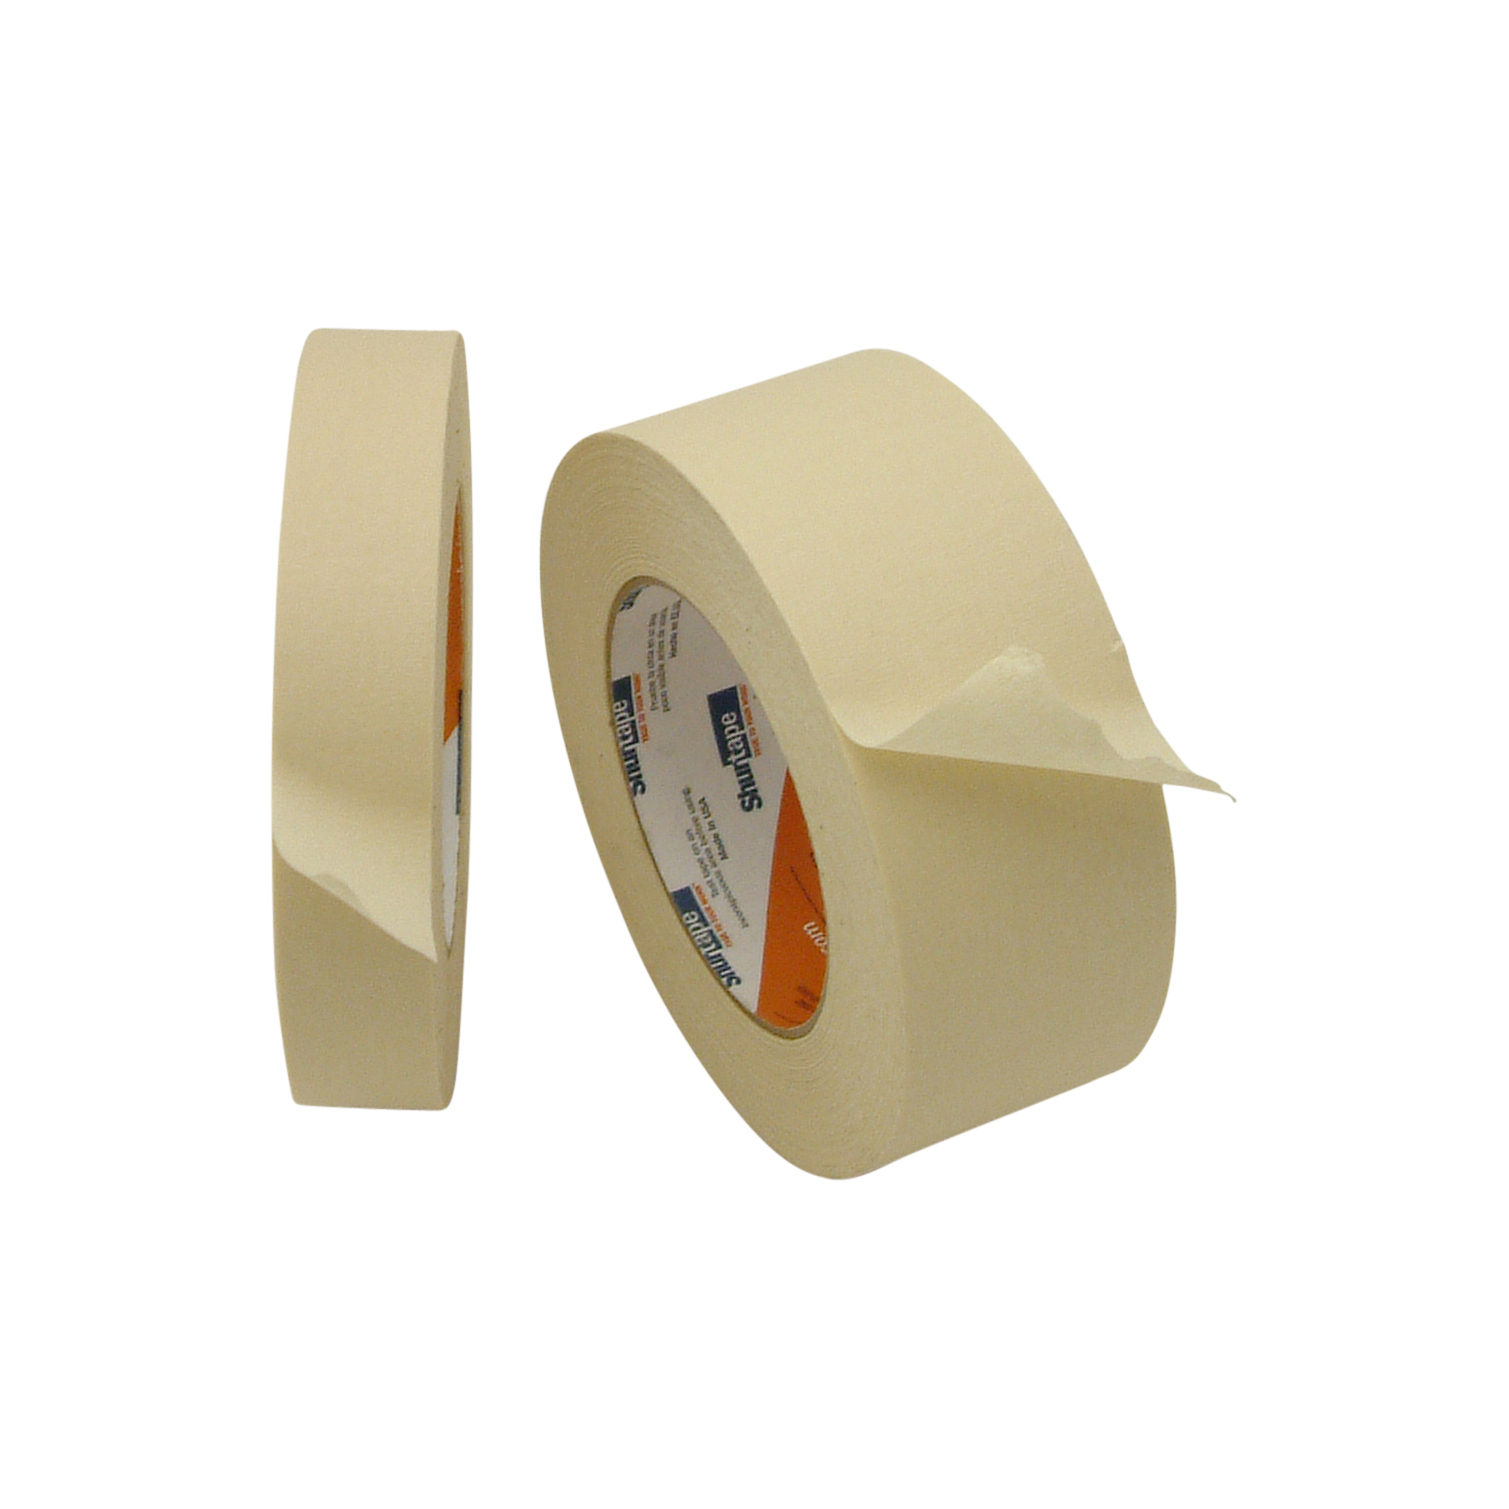 Shurtape CP-500 High Temperature Masking Tape